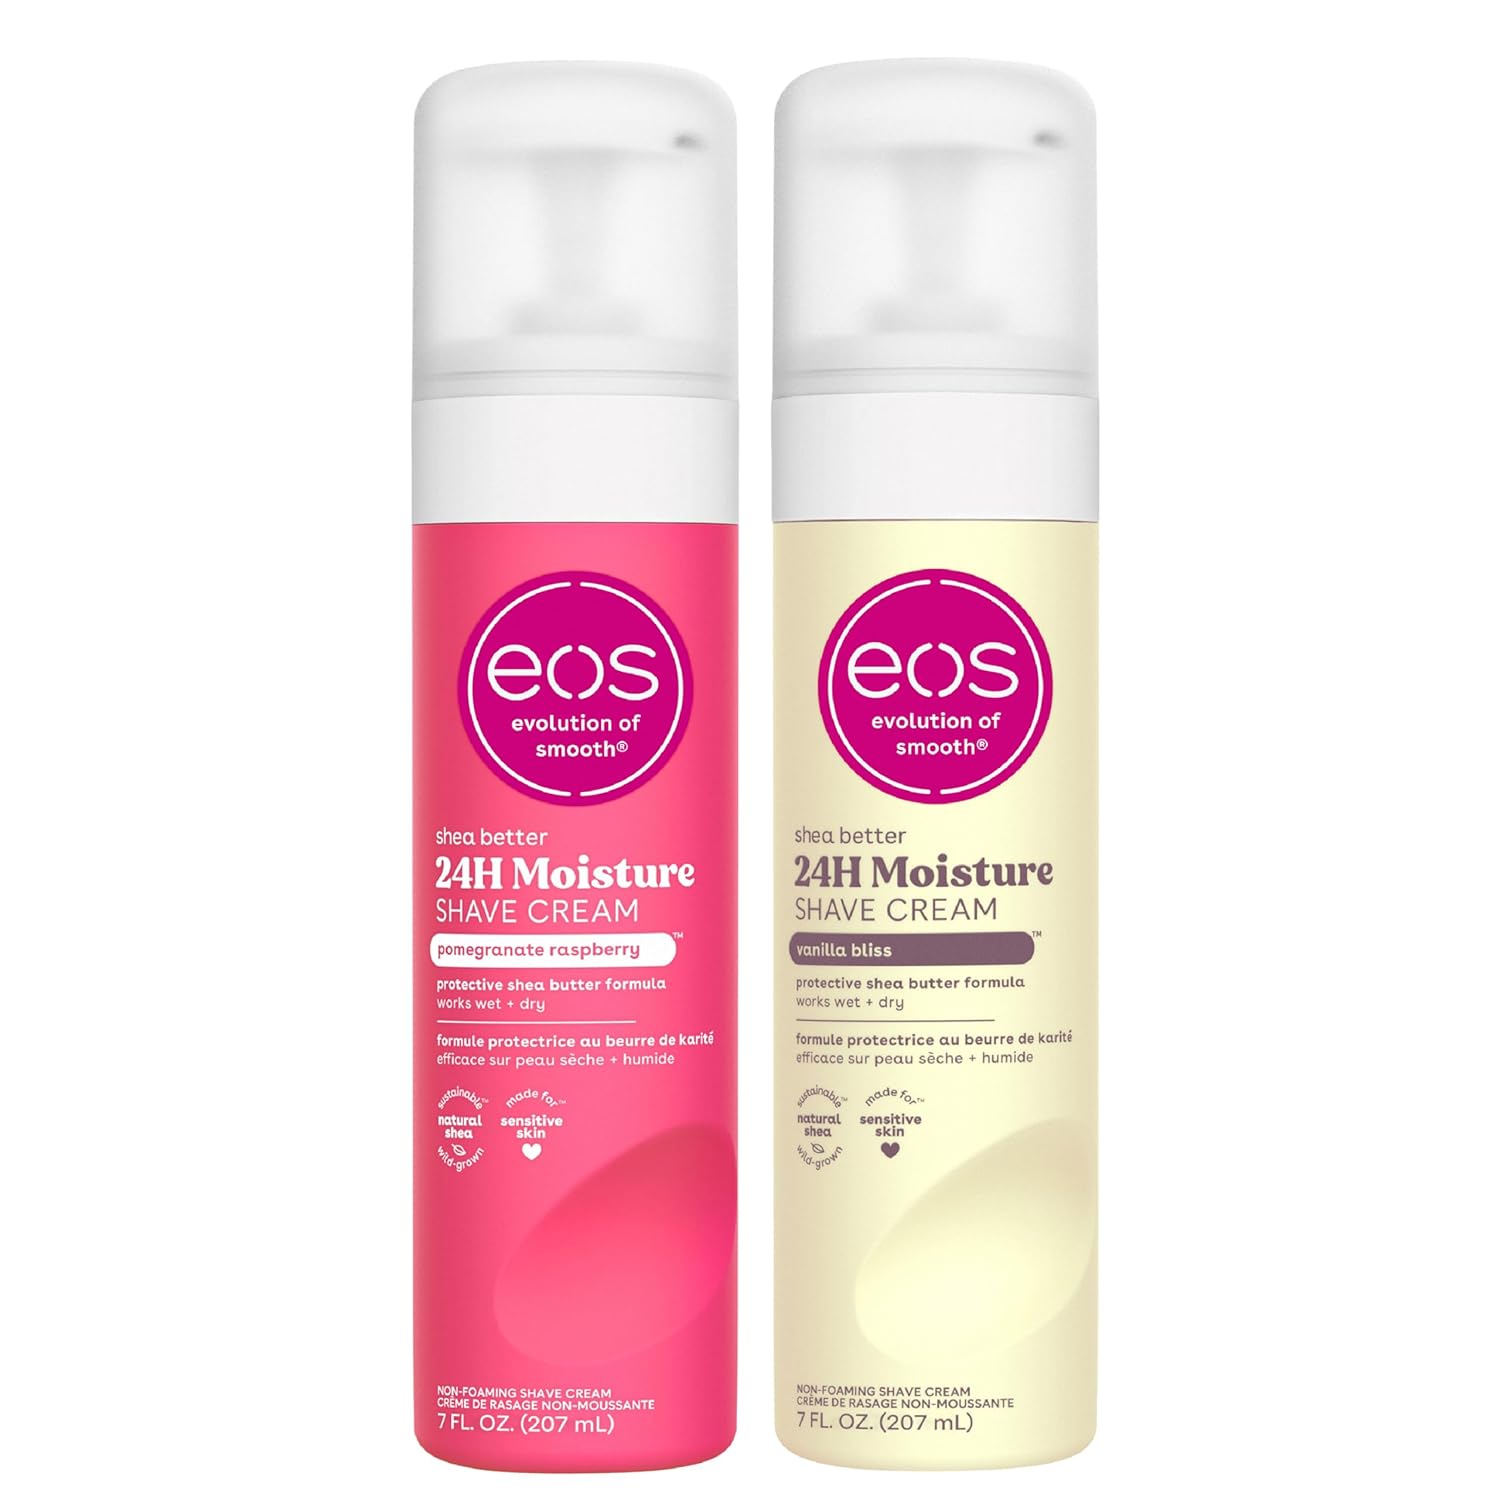 eos Shea Better Shave Cream- Vanilla Bliss & Pomegranate Raspberry, 24H Moisture Skin Care, 7 fl oz, 2-Pack